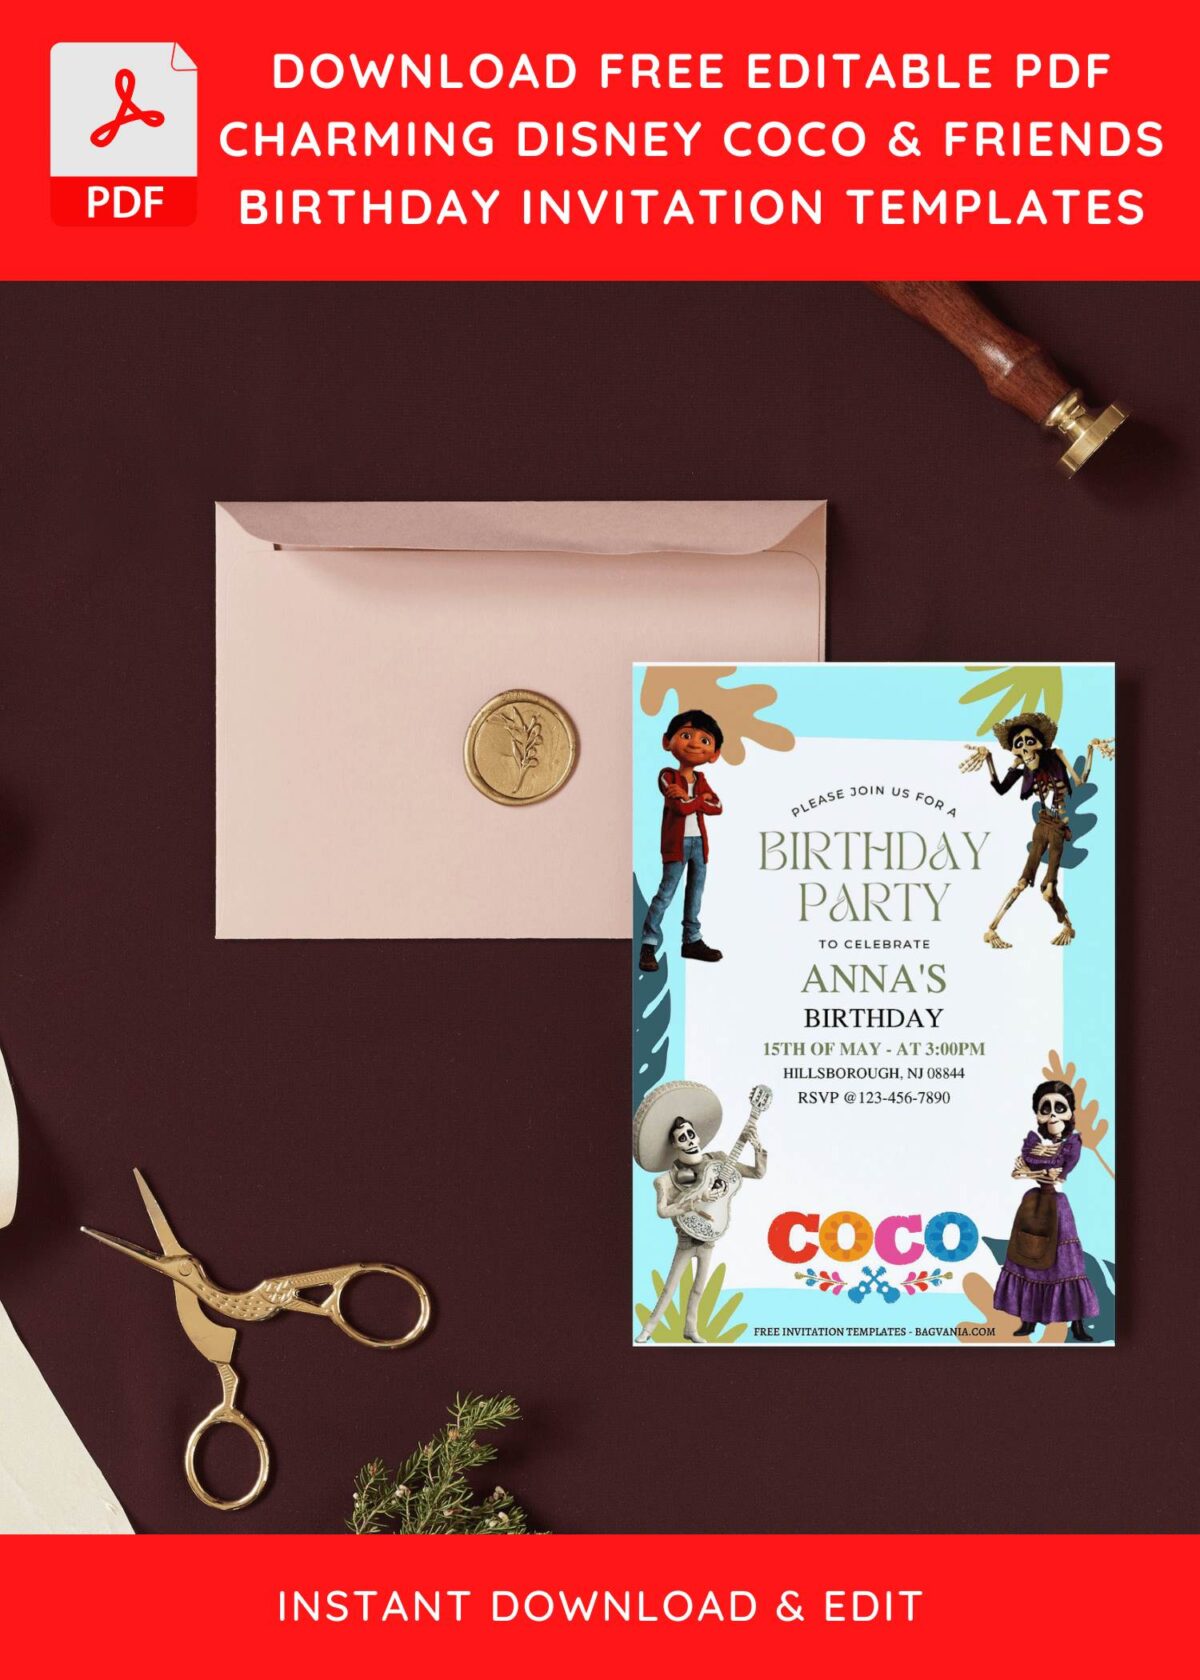 (Free Editable PDF) Summer Fiesta Disney Coco Birthday Invitation Templates I